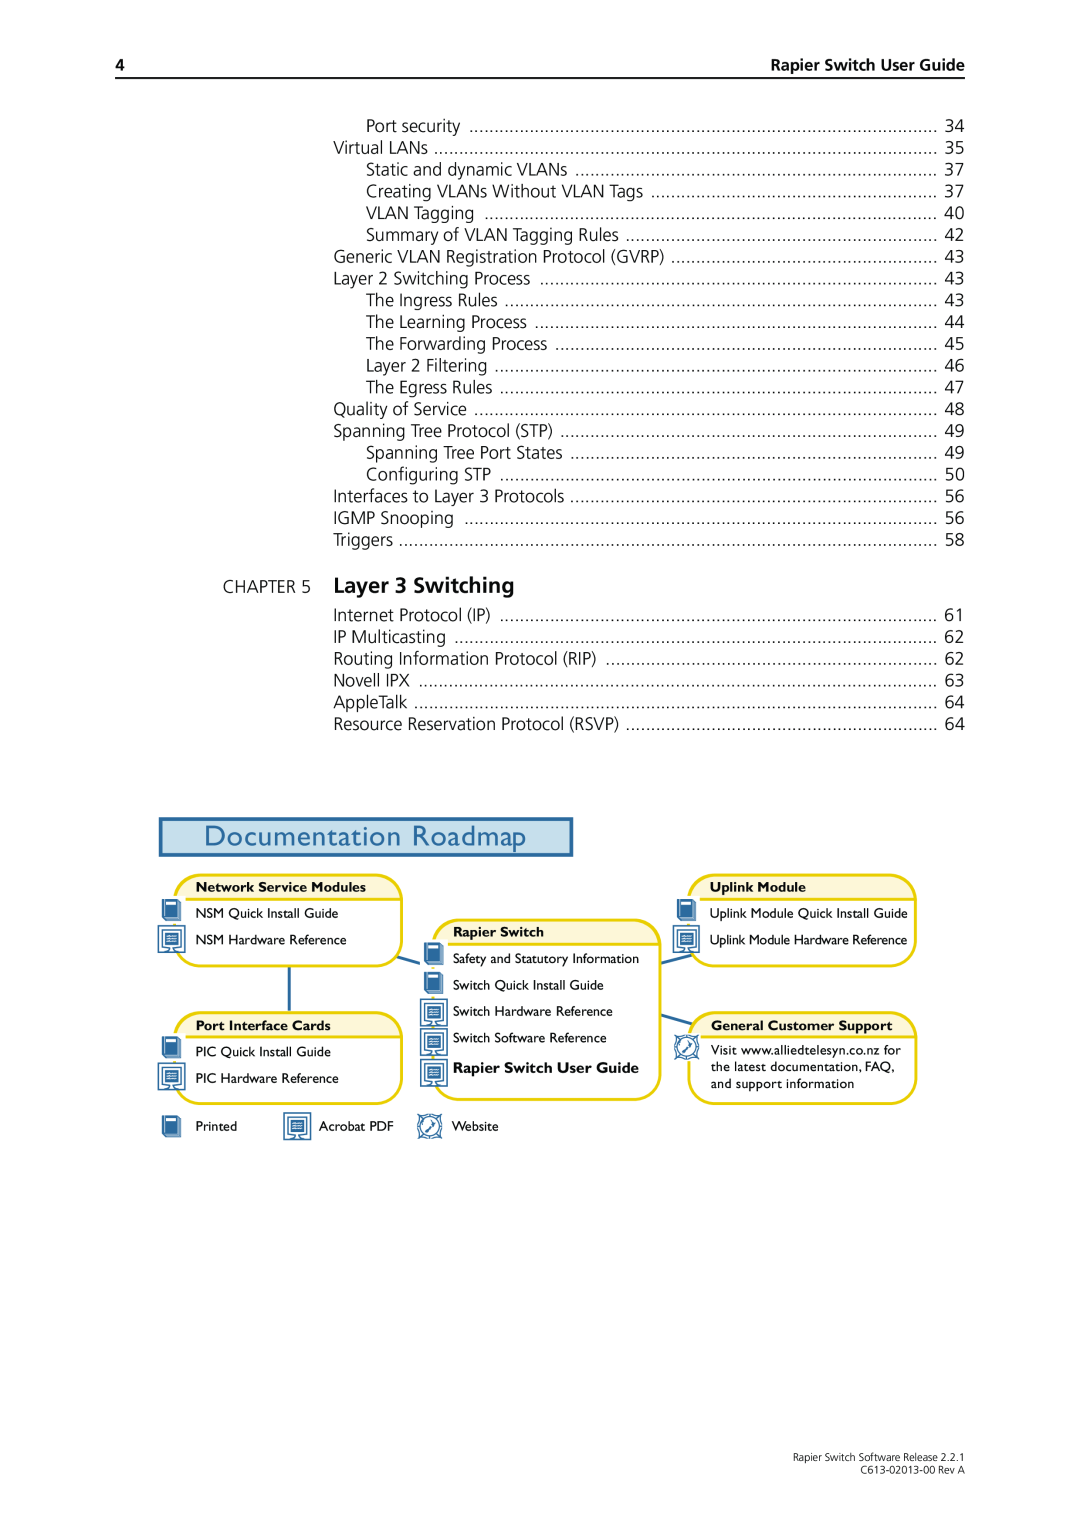 Allied Telesis C613-02013-00 manual Layer 3 Switching, Documentation Roadmap 